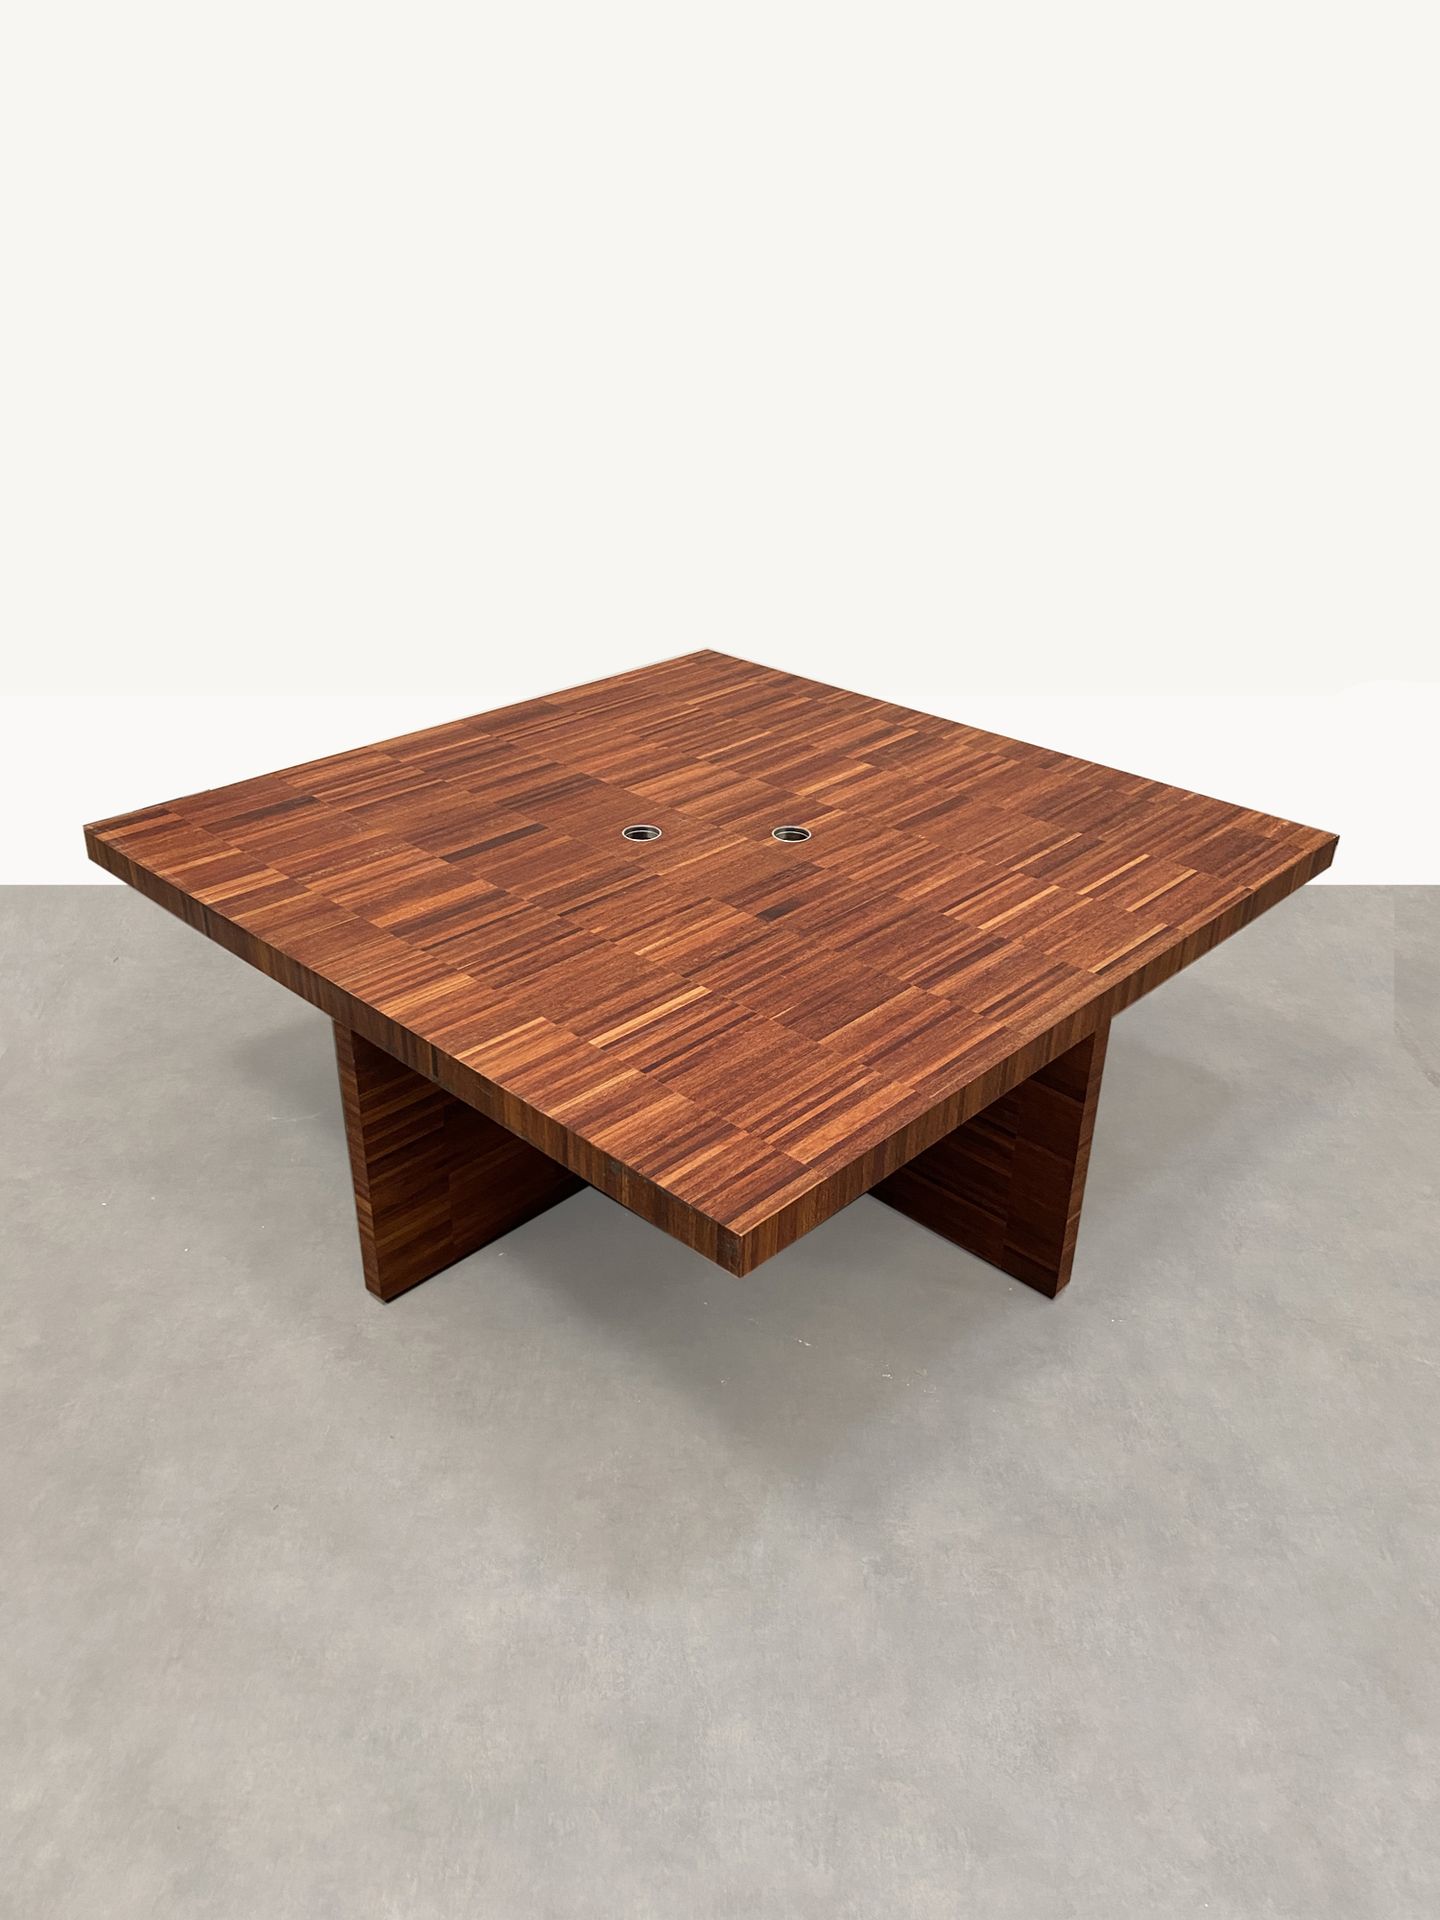 TRAVAIL CONTEMPORAIN 异国情调的木质贴面会议桌 

高_74厘米，宽_200厘米，深_200厘米